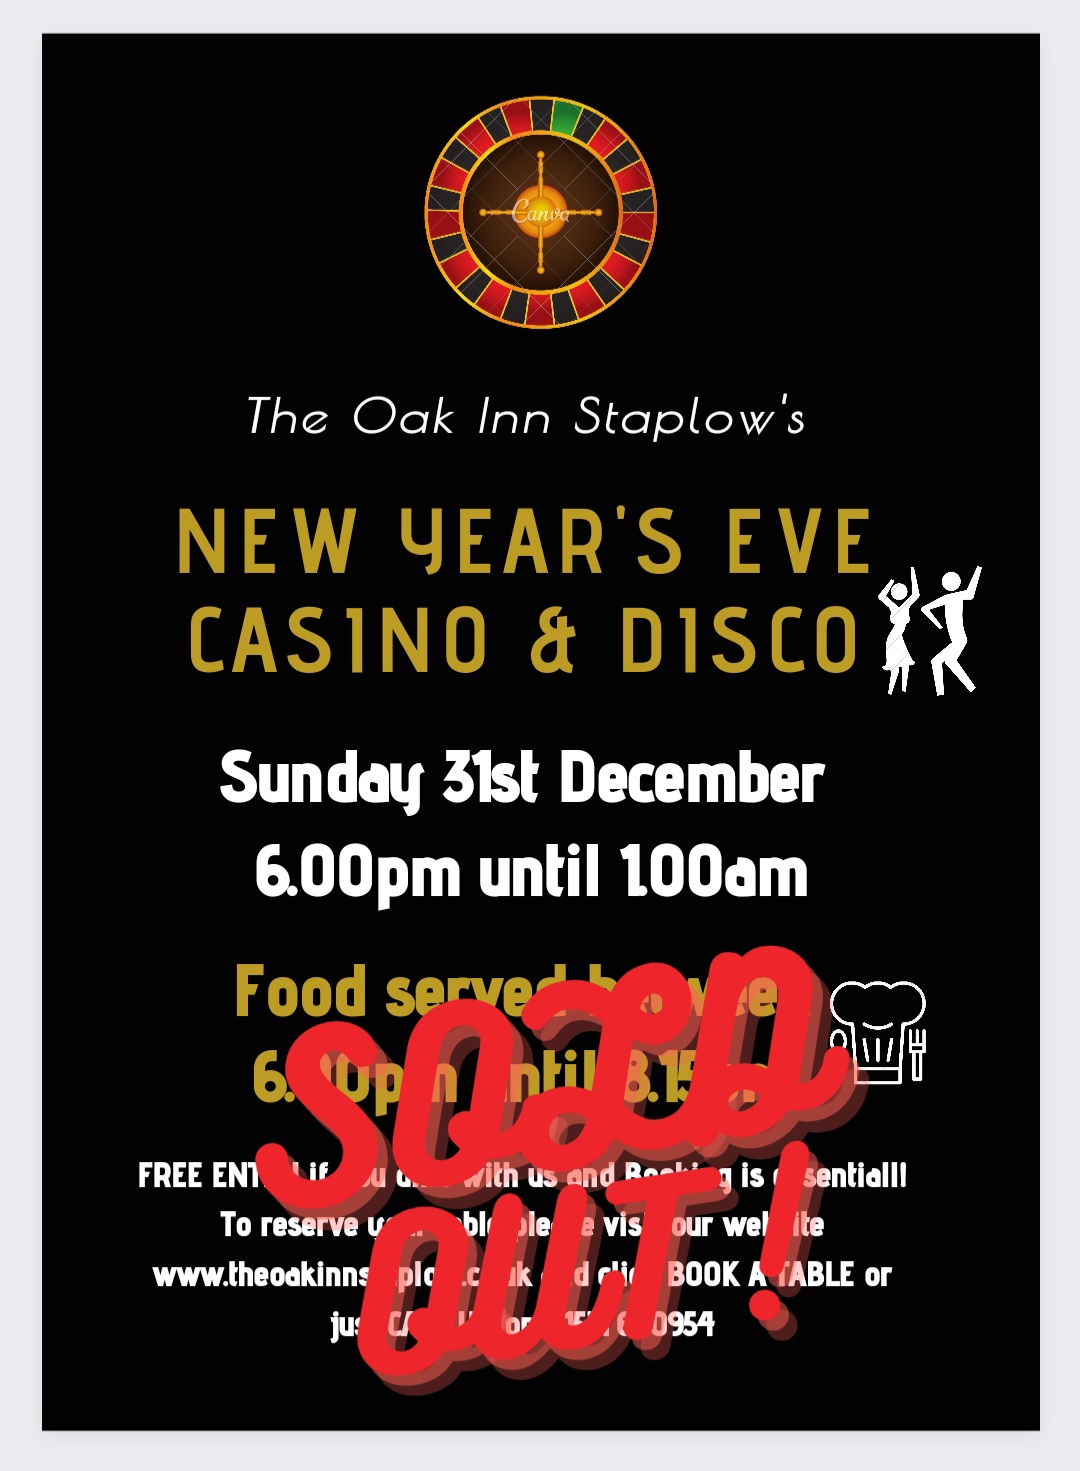 FREE NYE CASINO & DISCO EVENT at The Oak Inn Staplow